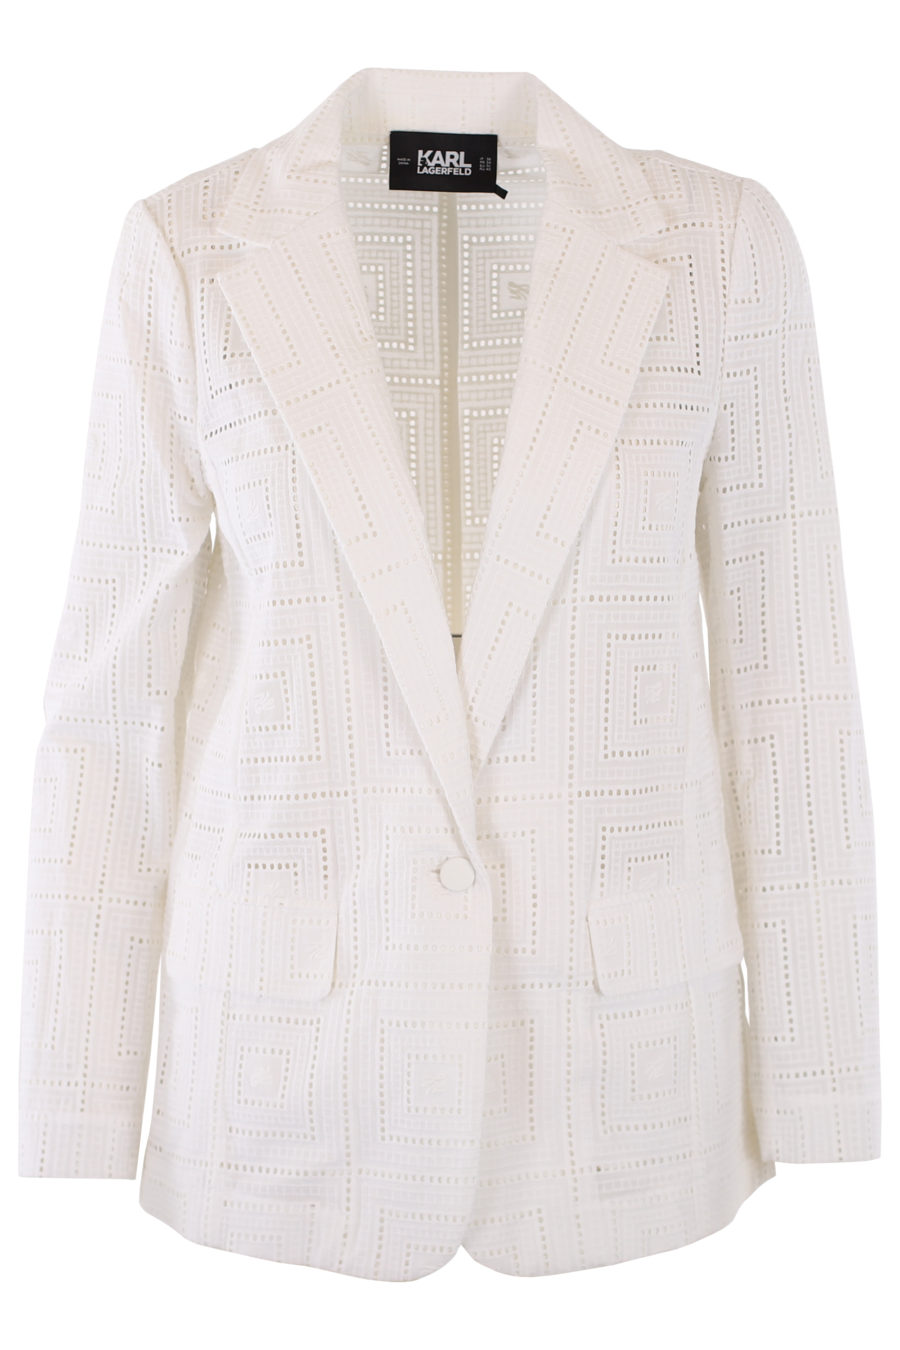 White embroidered blazer - IMG 1232